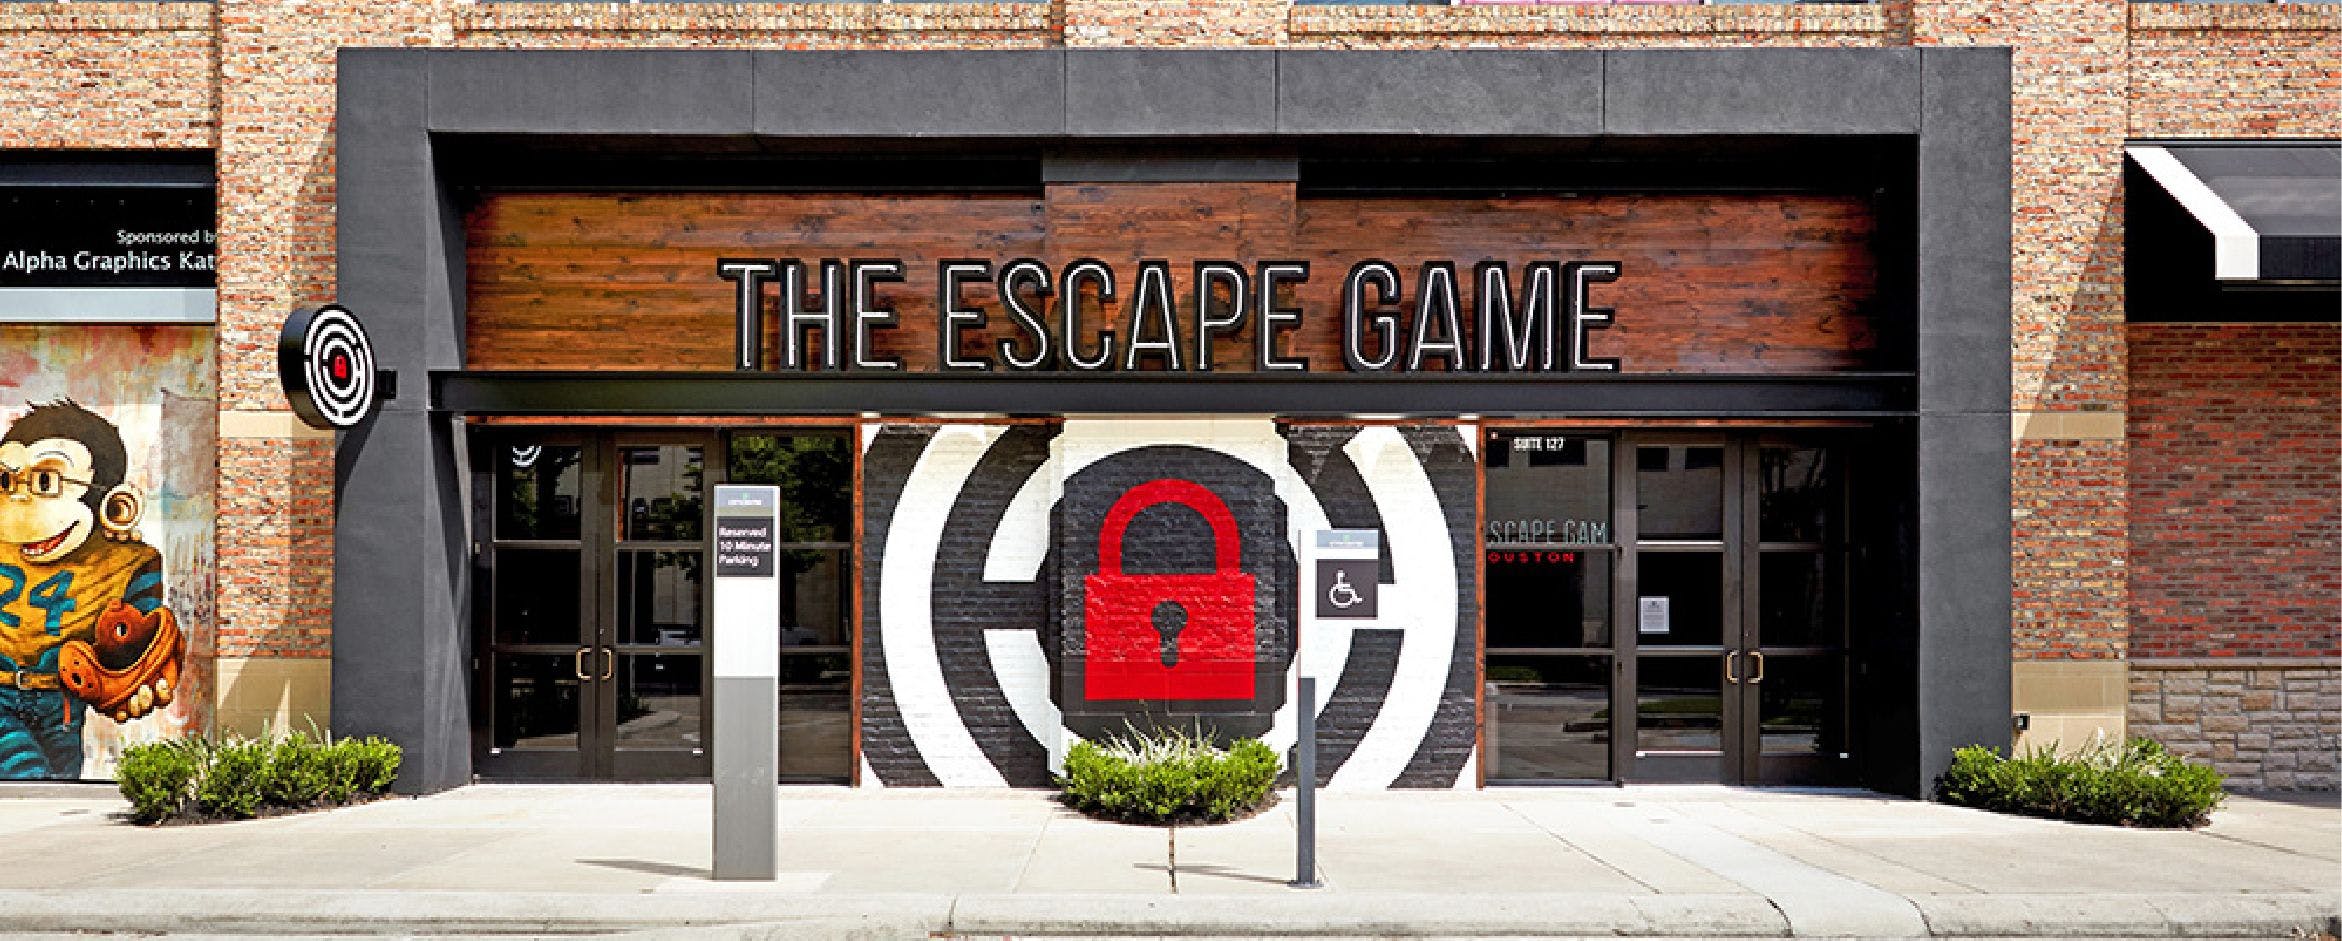 The Escape Game Houston storefront